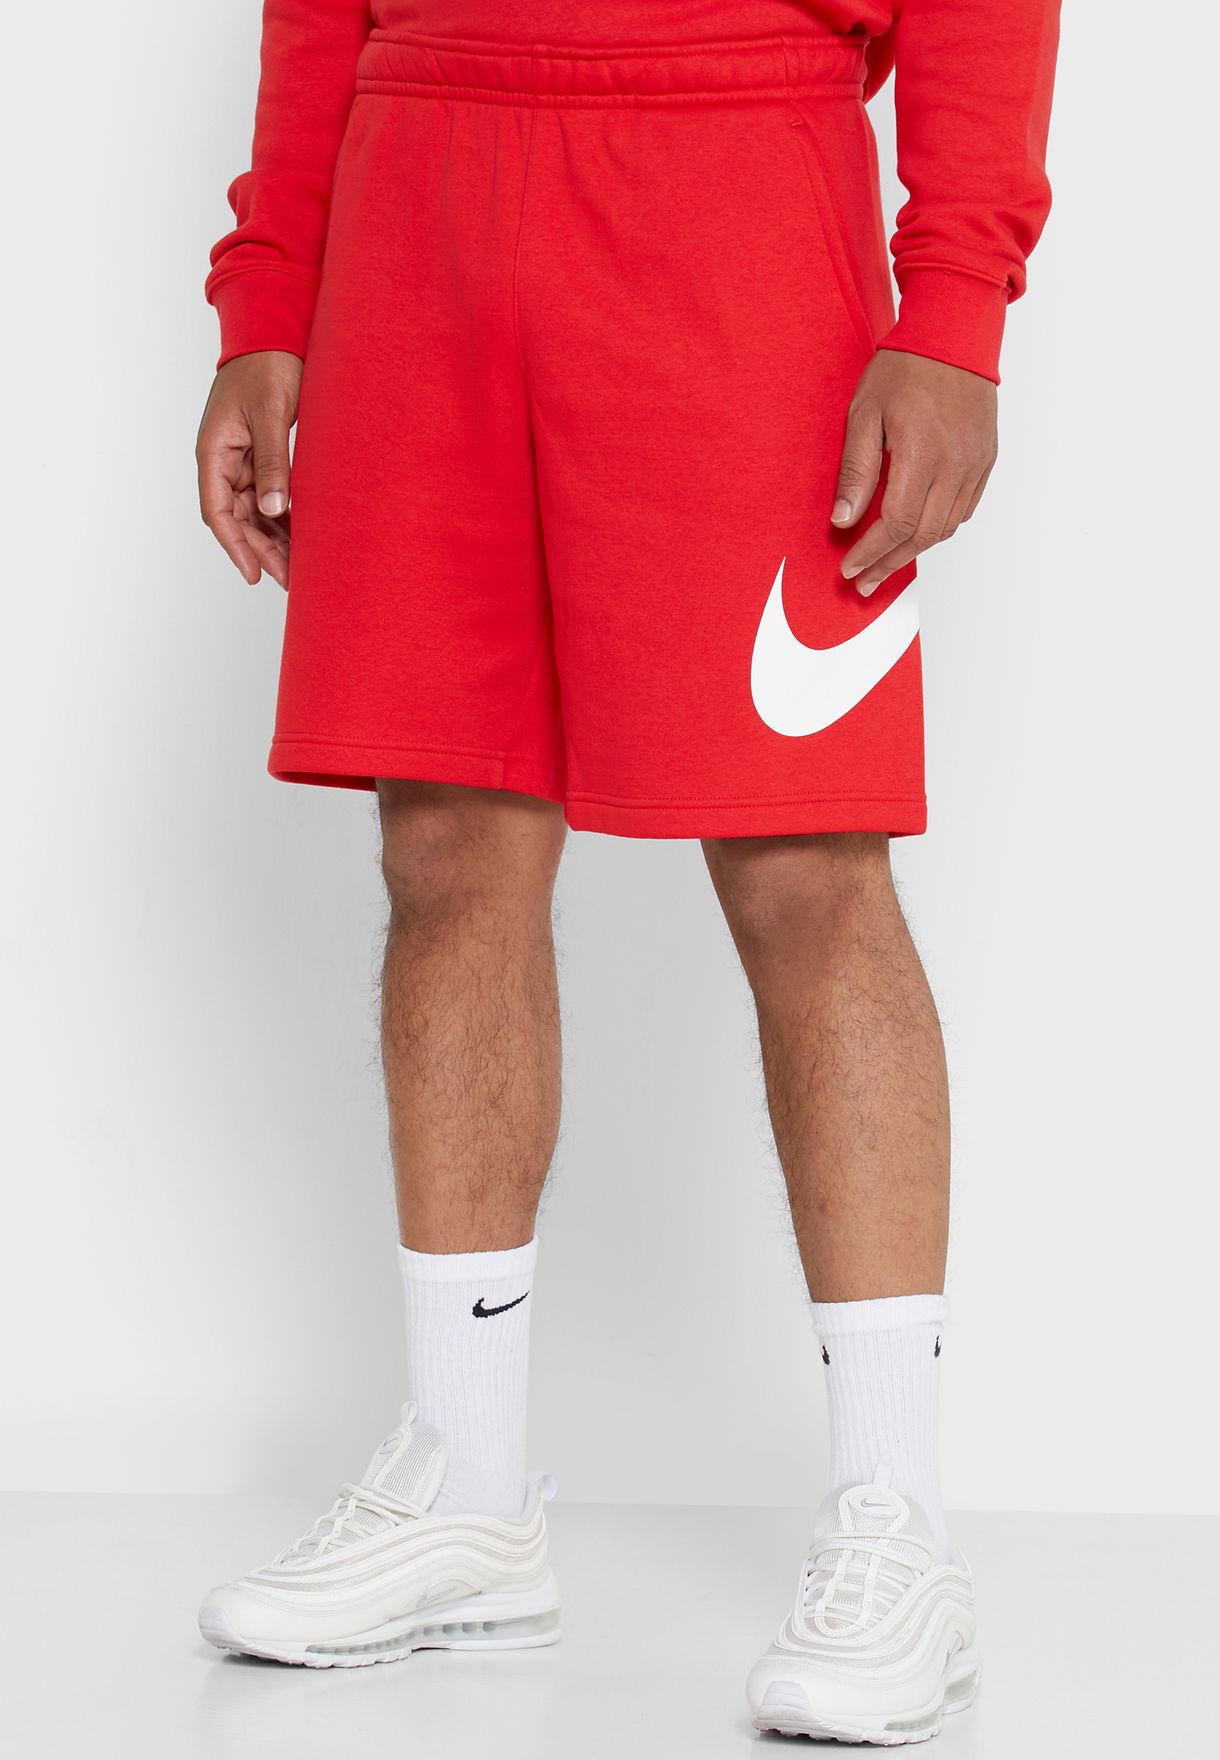 Buy > nike red shorts mens > in stock